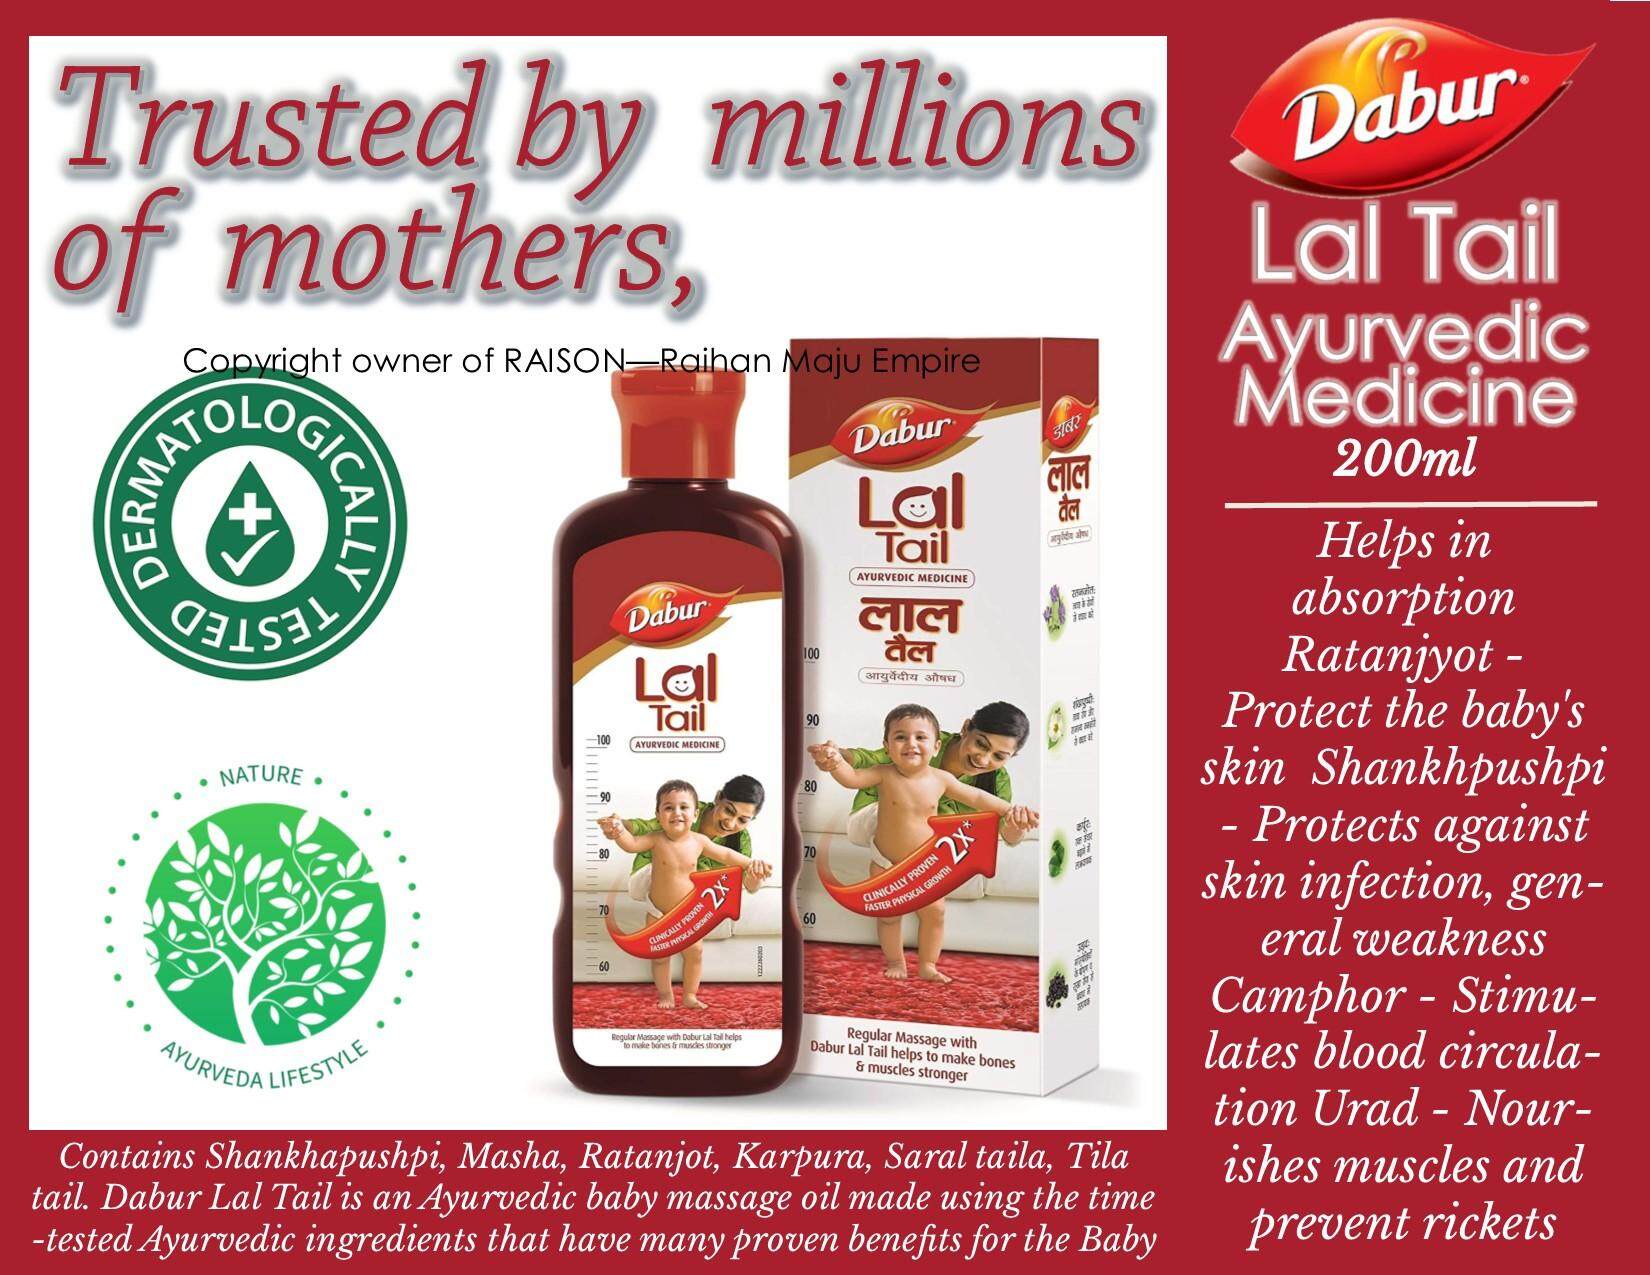 Dabur Lal Tail Ayurvedic Medicine 200ml - Strengthening baby's bones and  muscles | Lazada